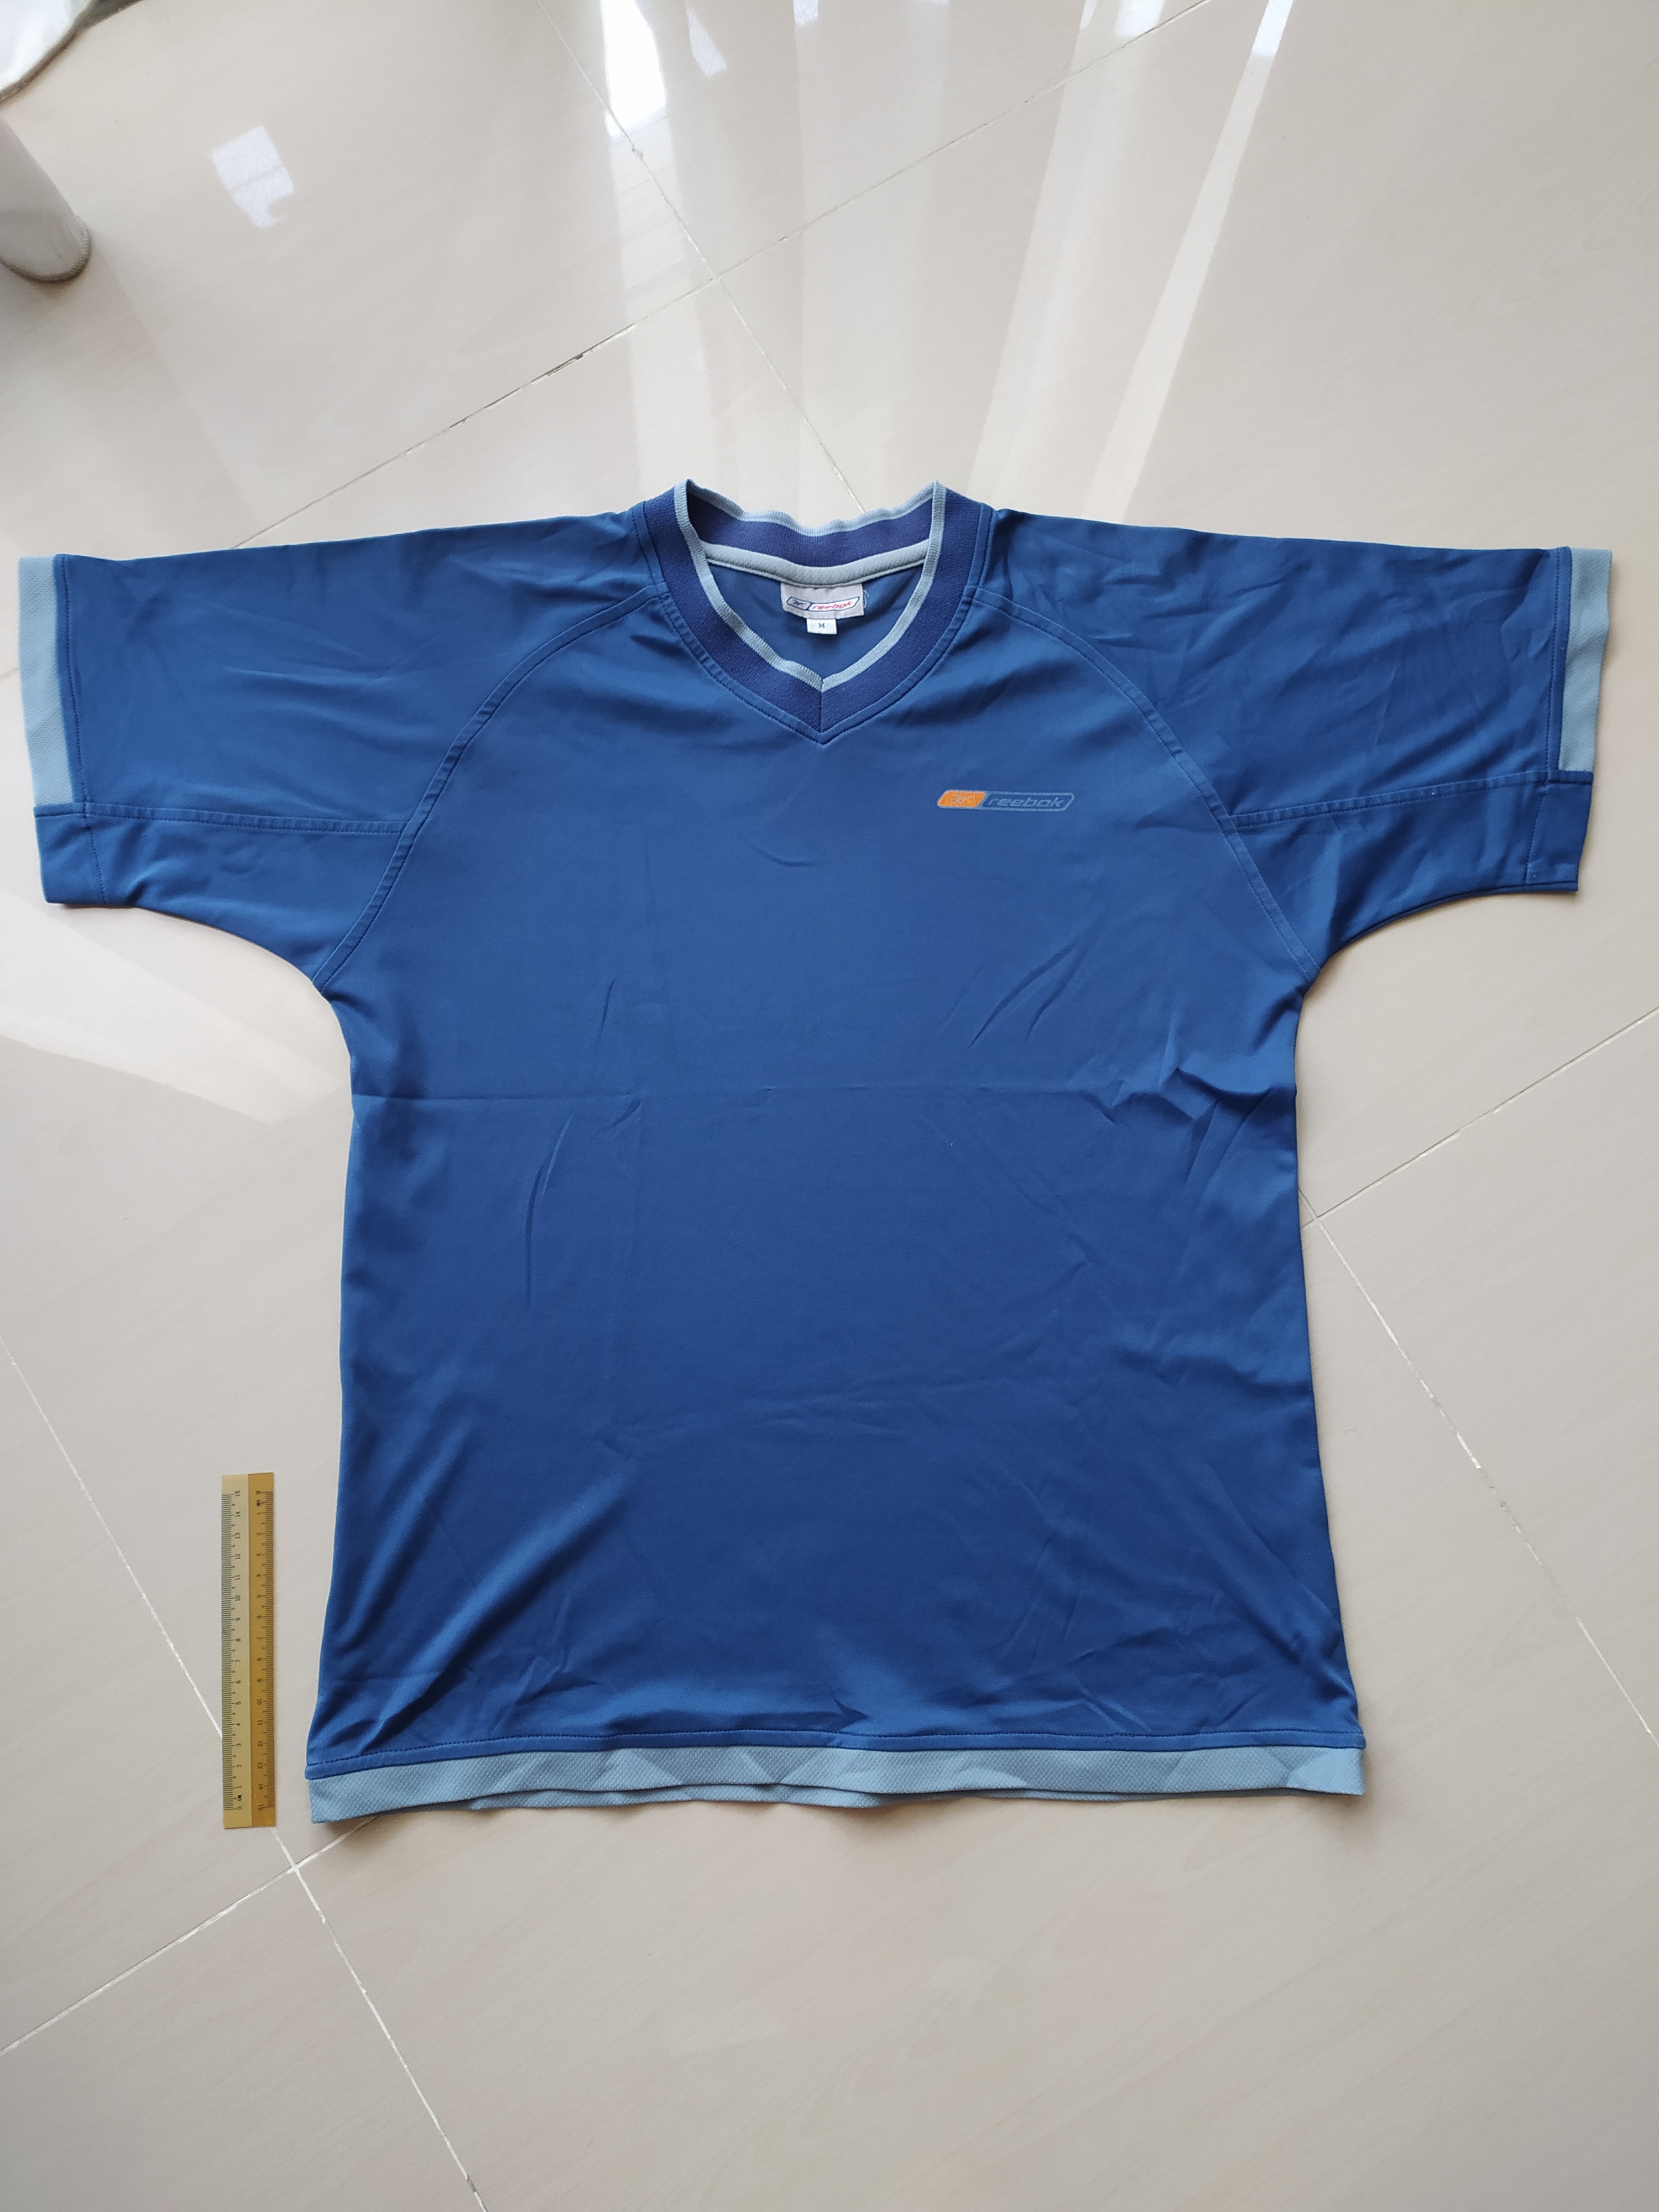 Reebok Dry Fit Shirt, Sports, Athletic 